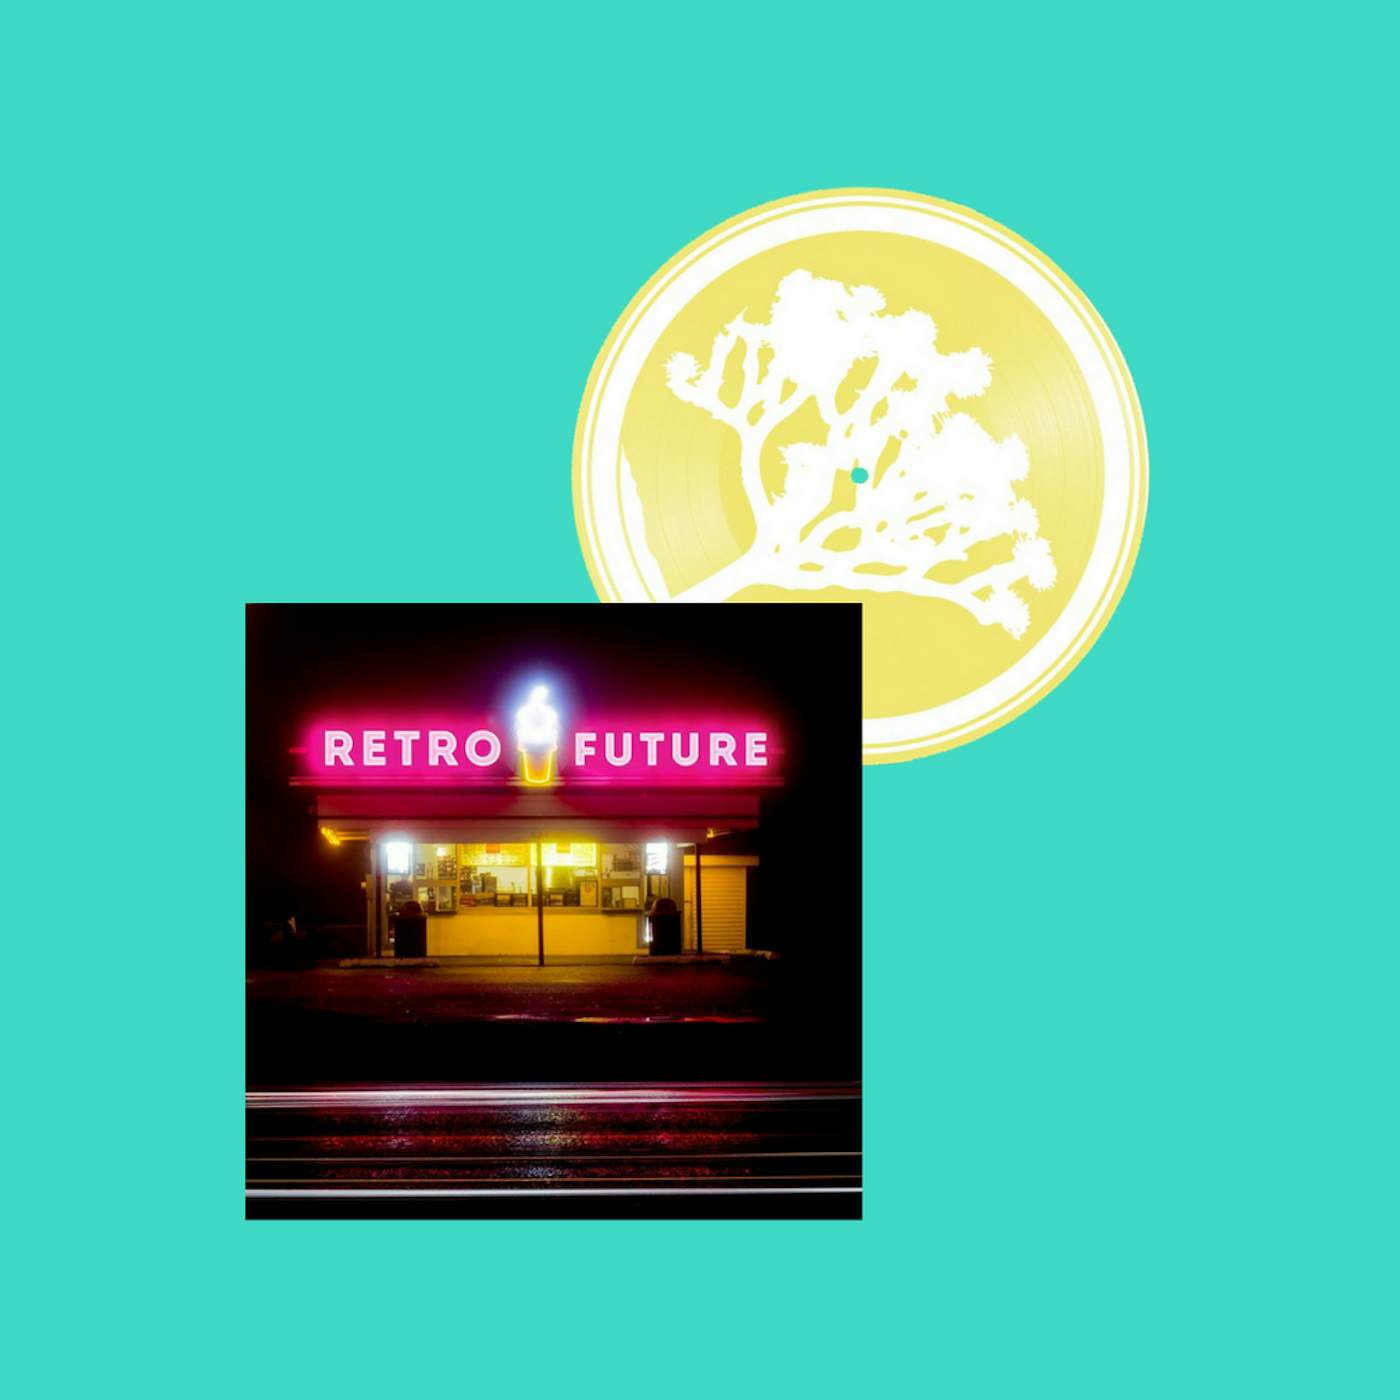 Forever Came Calling Retro Future Vinyl (Yellow Cake Cone)